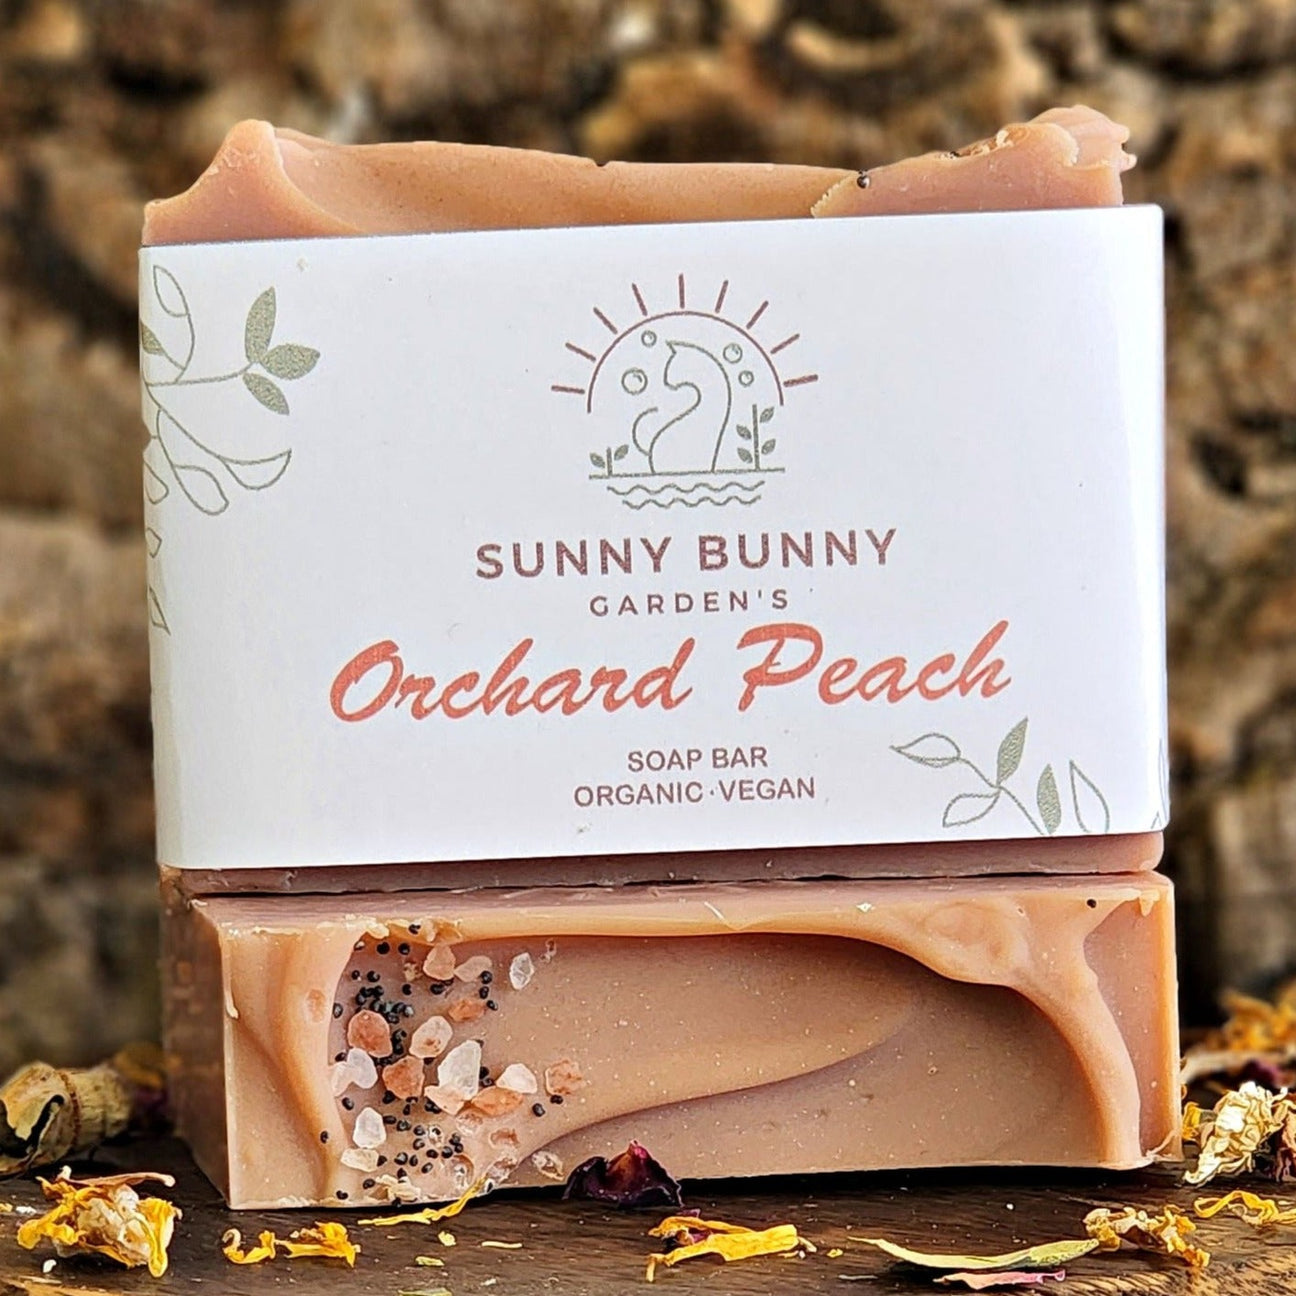 Orchard Peach Soap Bar